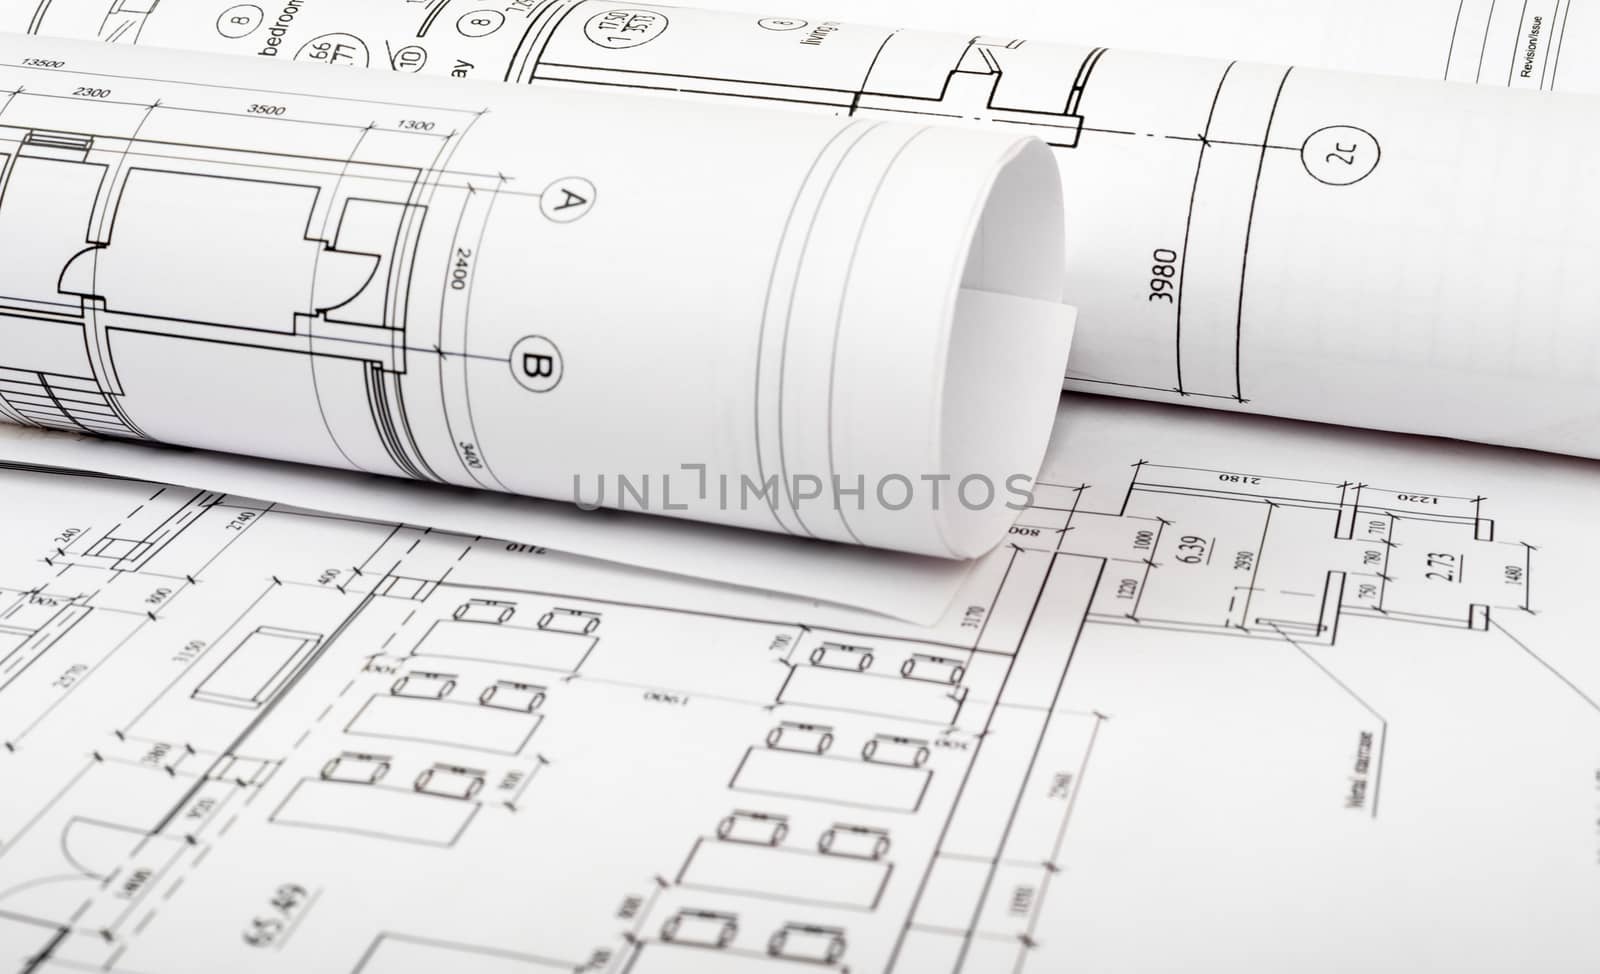 Rolls of blueprints, close up view. Building concept